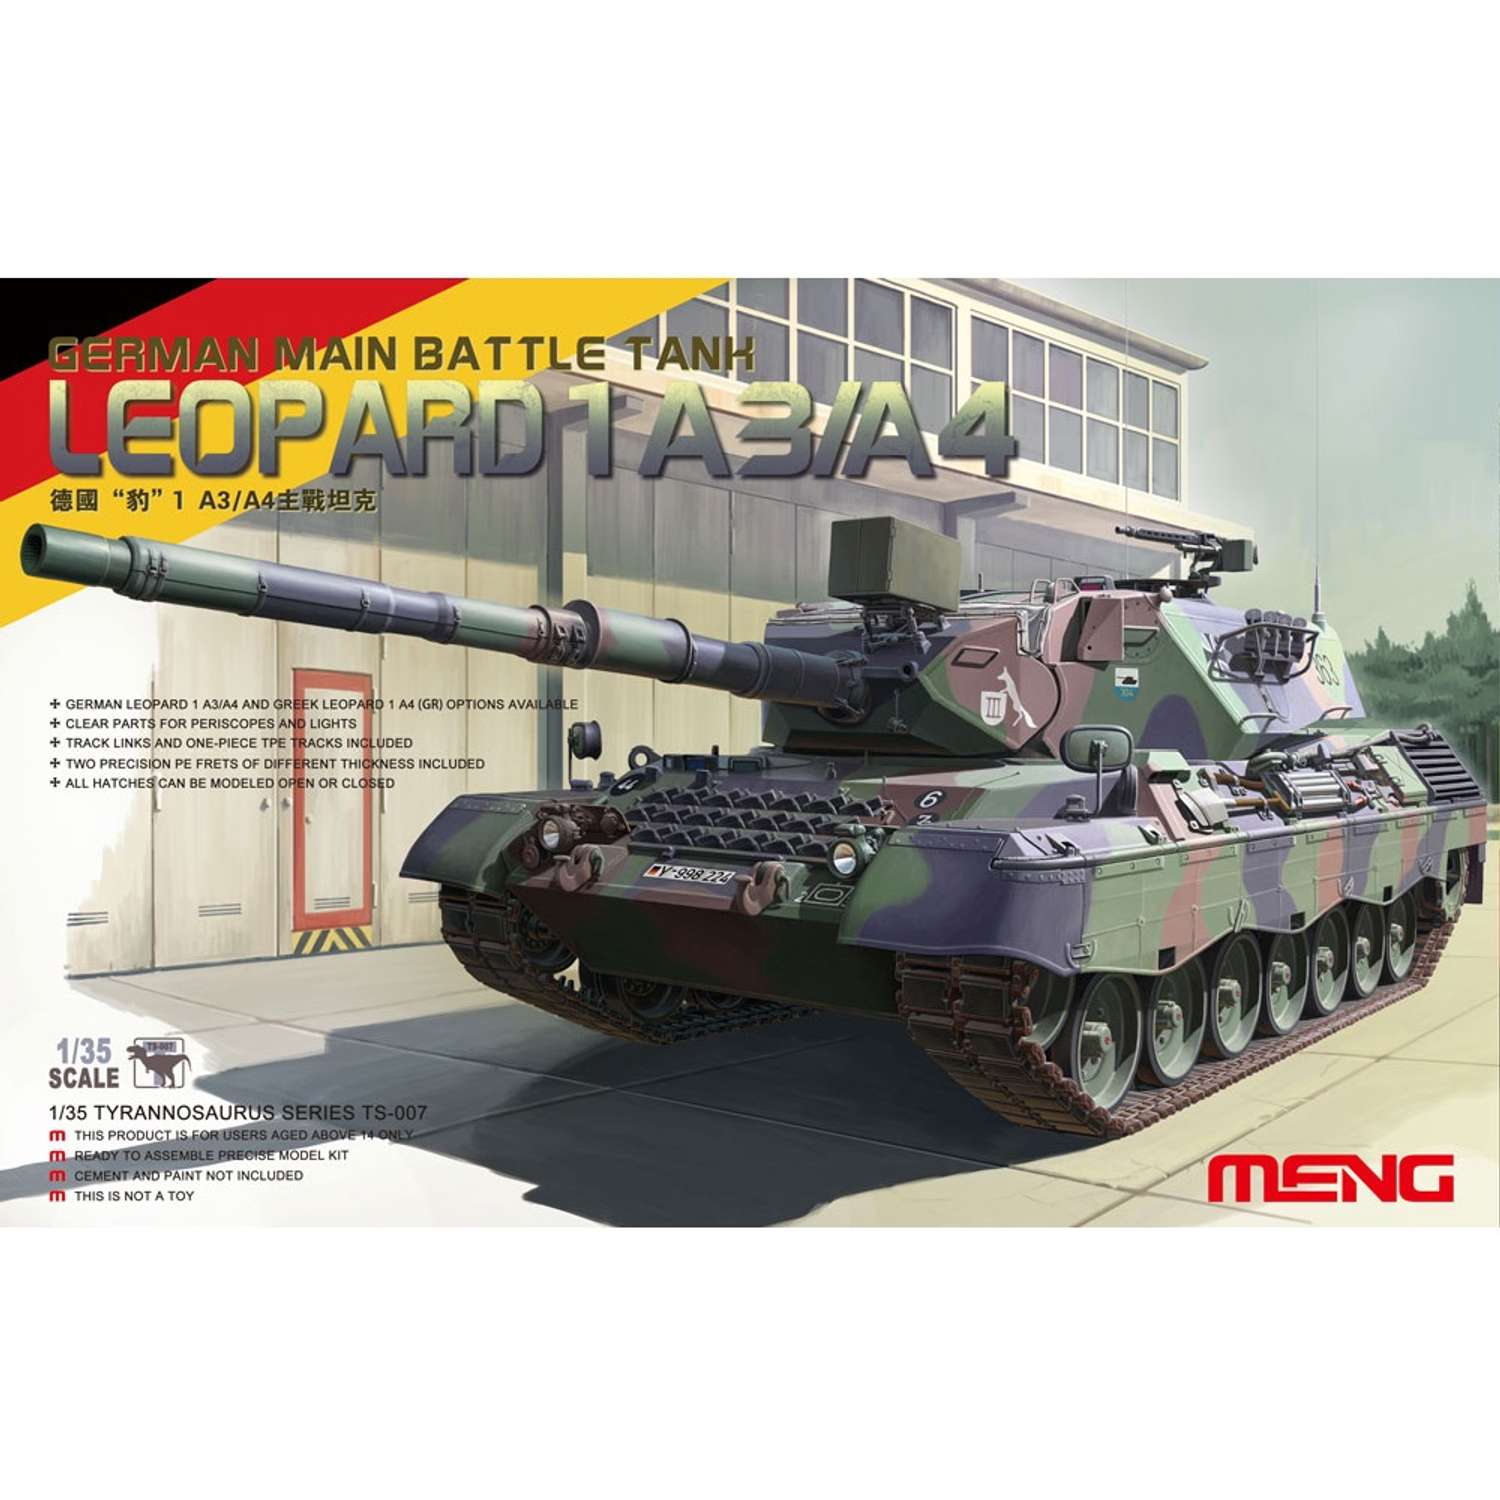 Сборные модели MENG TS-007 танк Main Battle Tank Leopard 1 A3/A4 1/35 20310790502 - фото 2